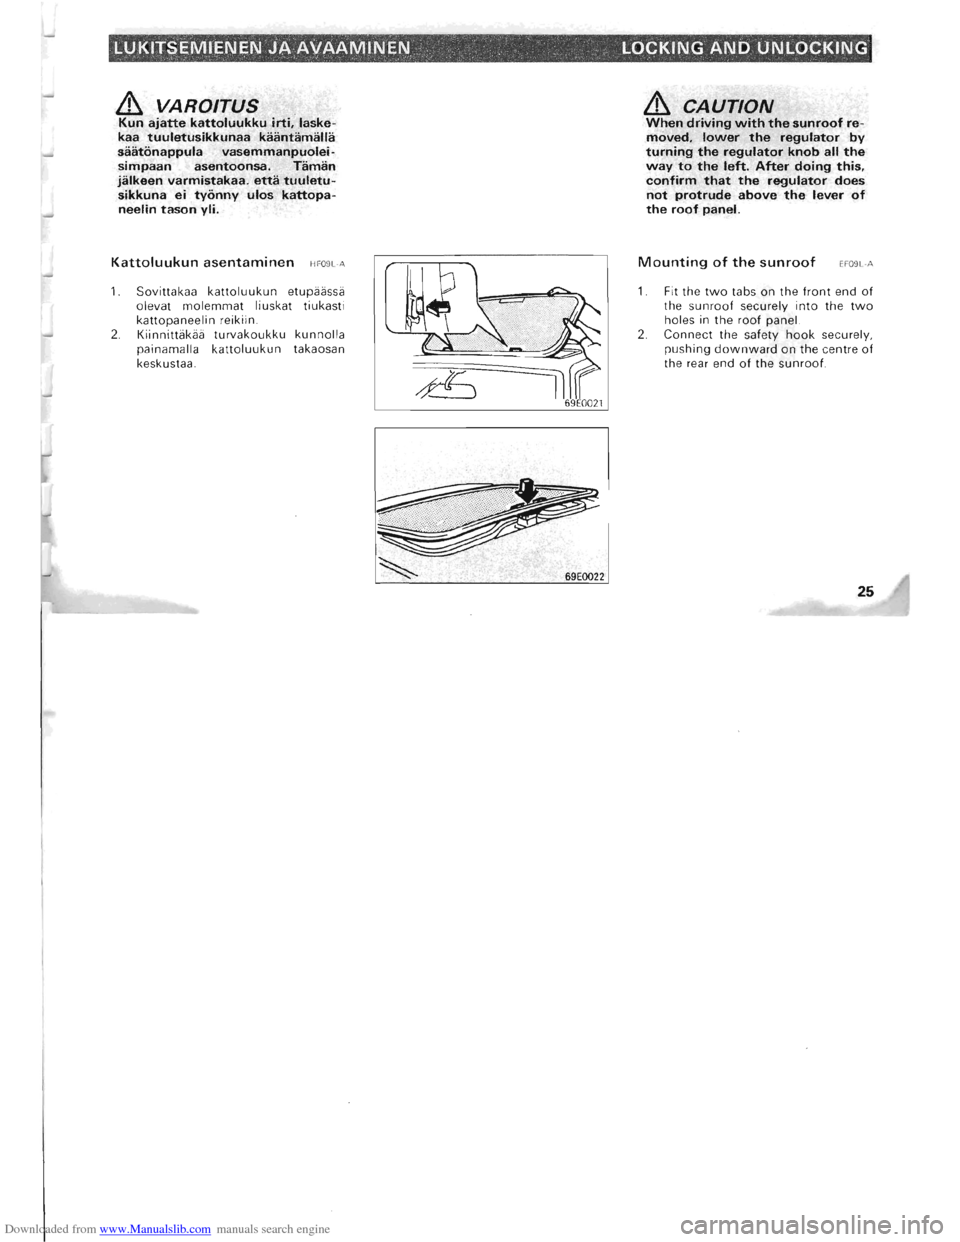 MITSUBISHI PAJERO 1996 2.G User Guide Downloaded from www.Manualslib.com manuals search engine LUKITSEMIENEN JA AVAAMINEN . _ LOCKING AND UNLOCKING . . " " 
& VAROITUS Kun ajatte kattoluukkuirti. laske­
kaa  tuuletusikkunaa  kaantamalla